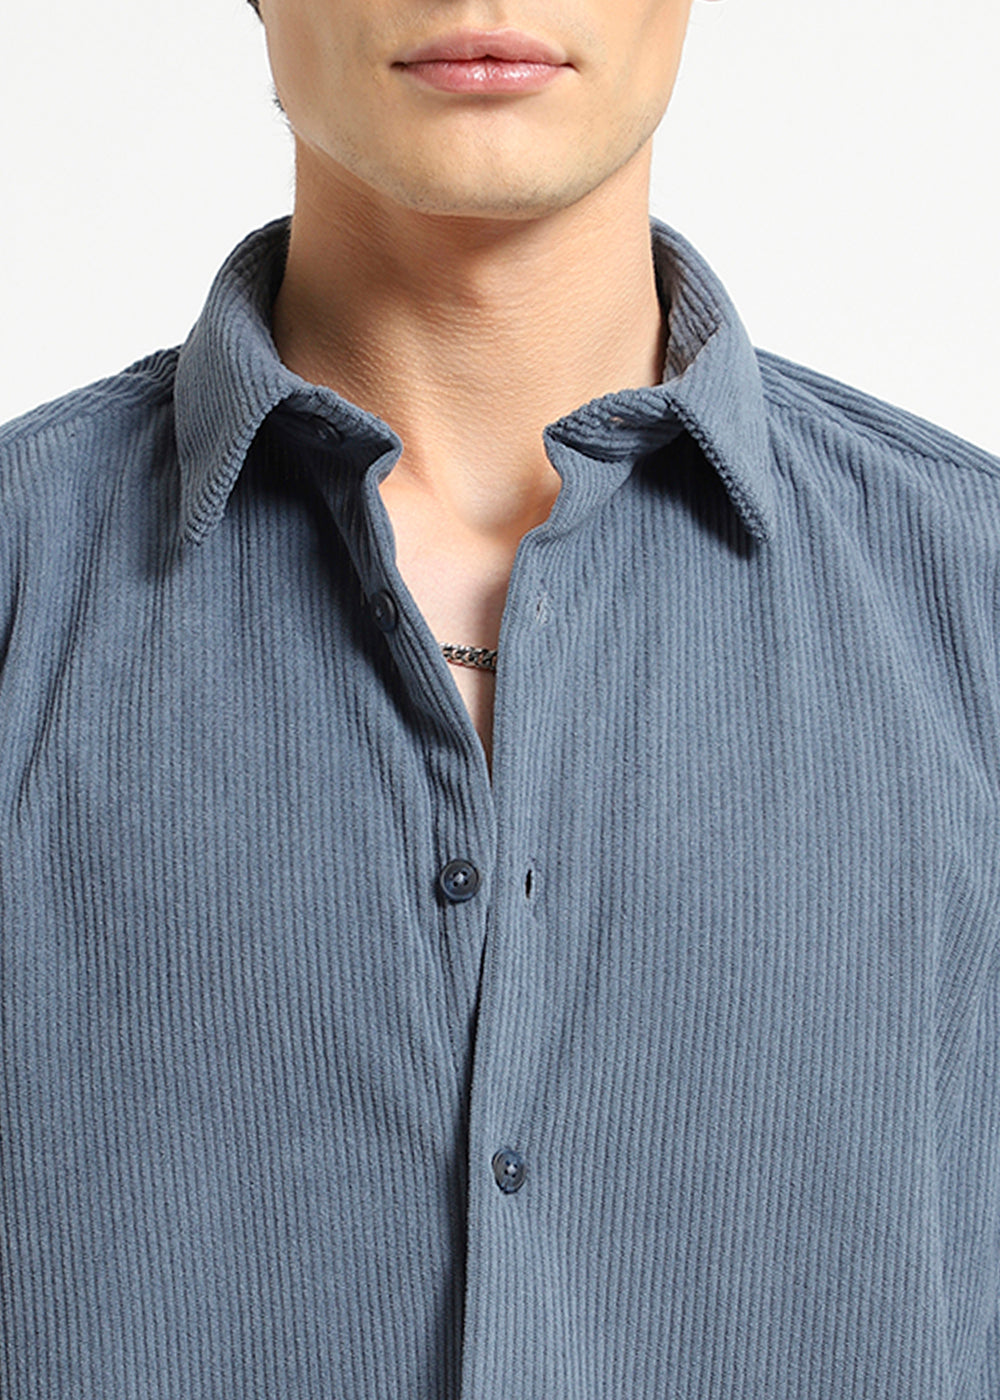 Pastel Blue Corduroy Shirt